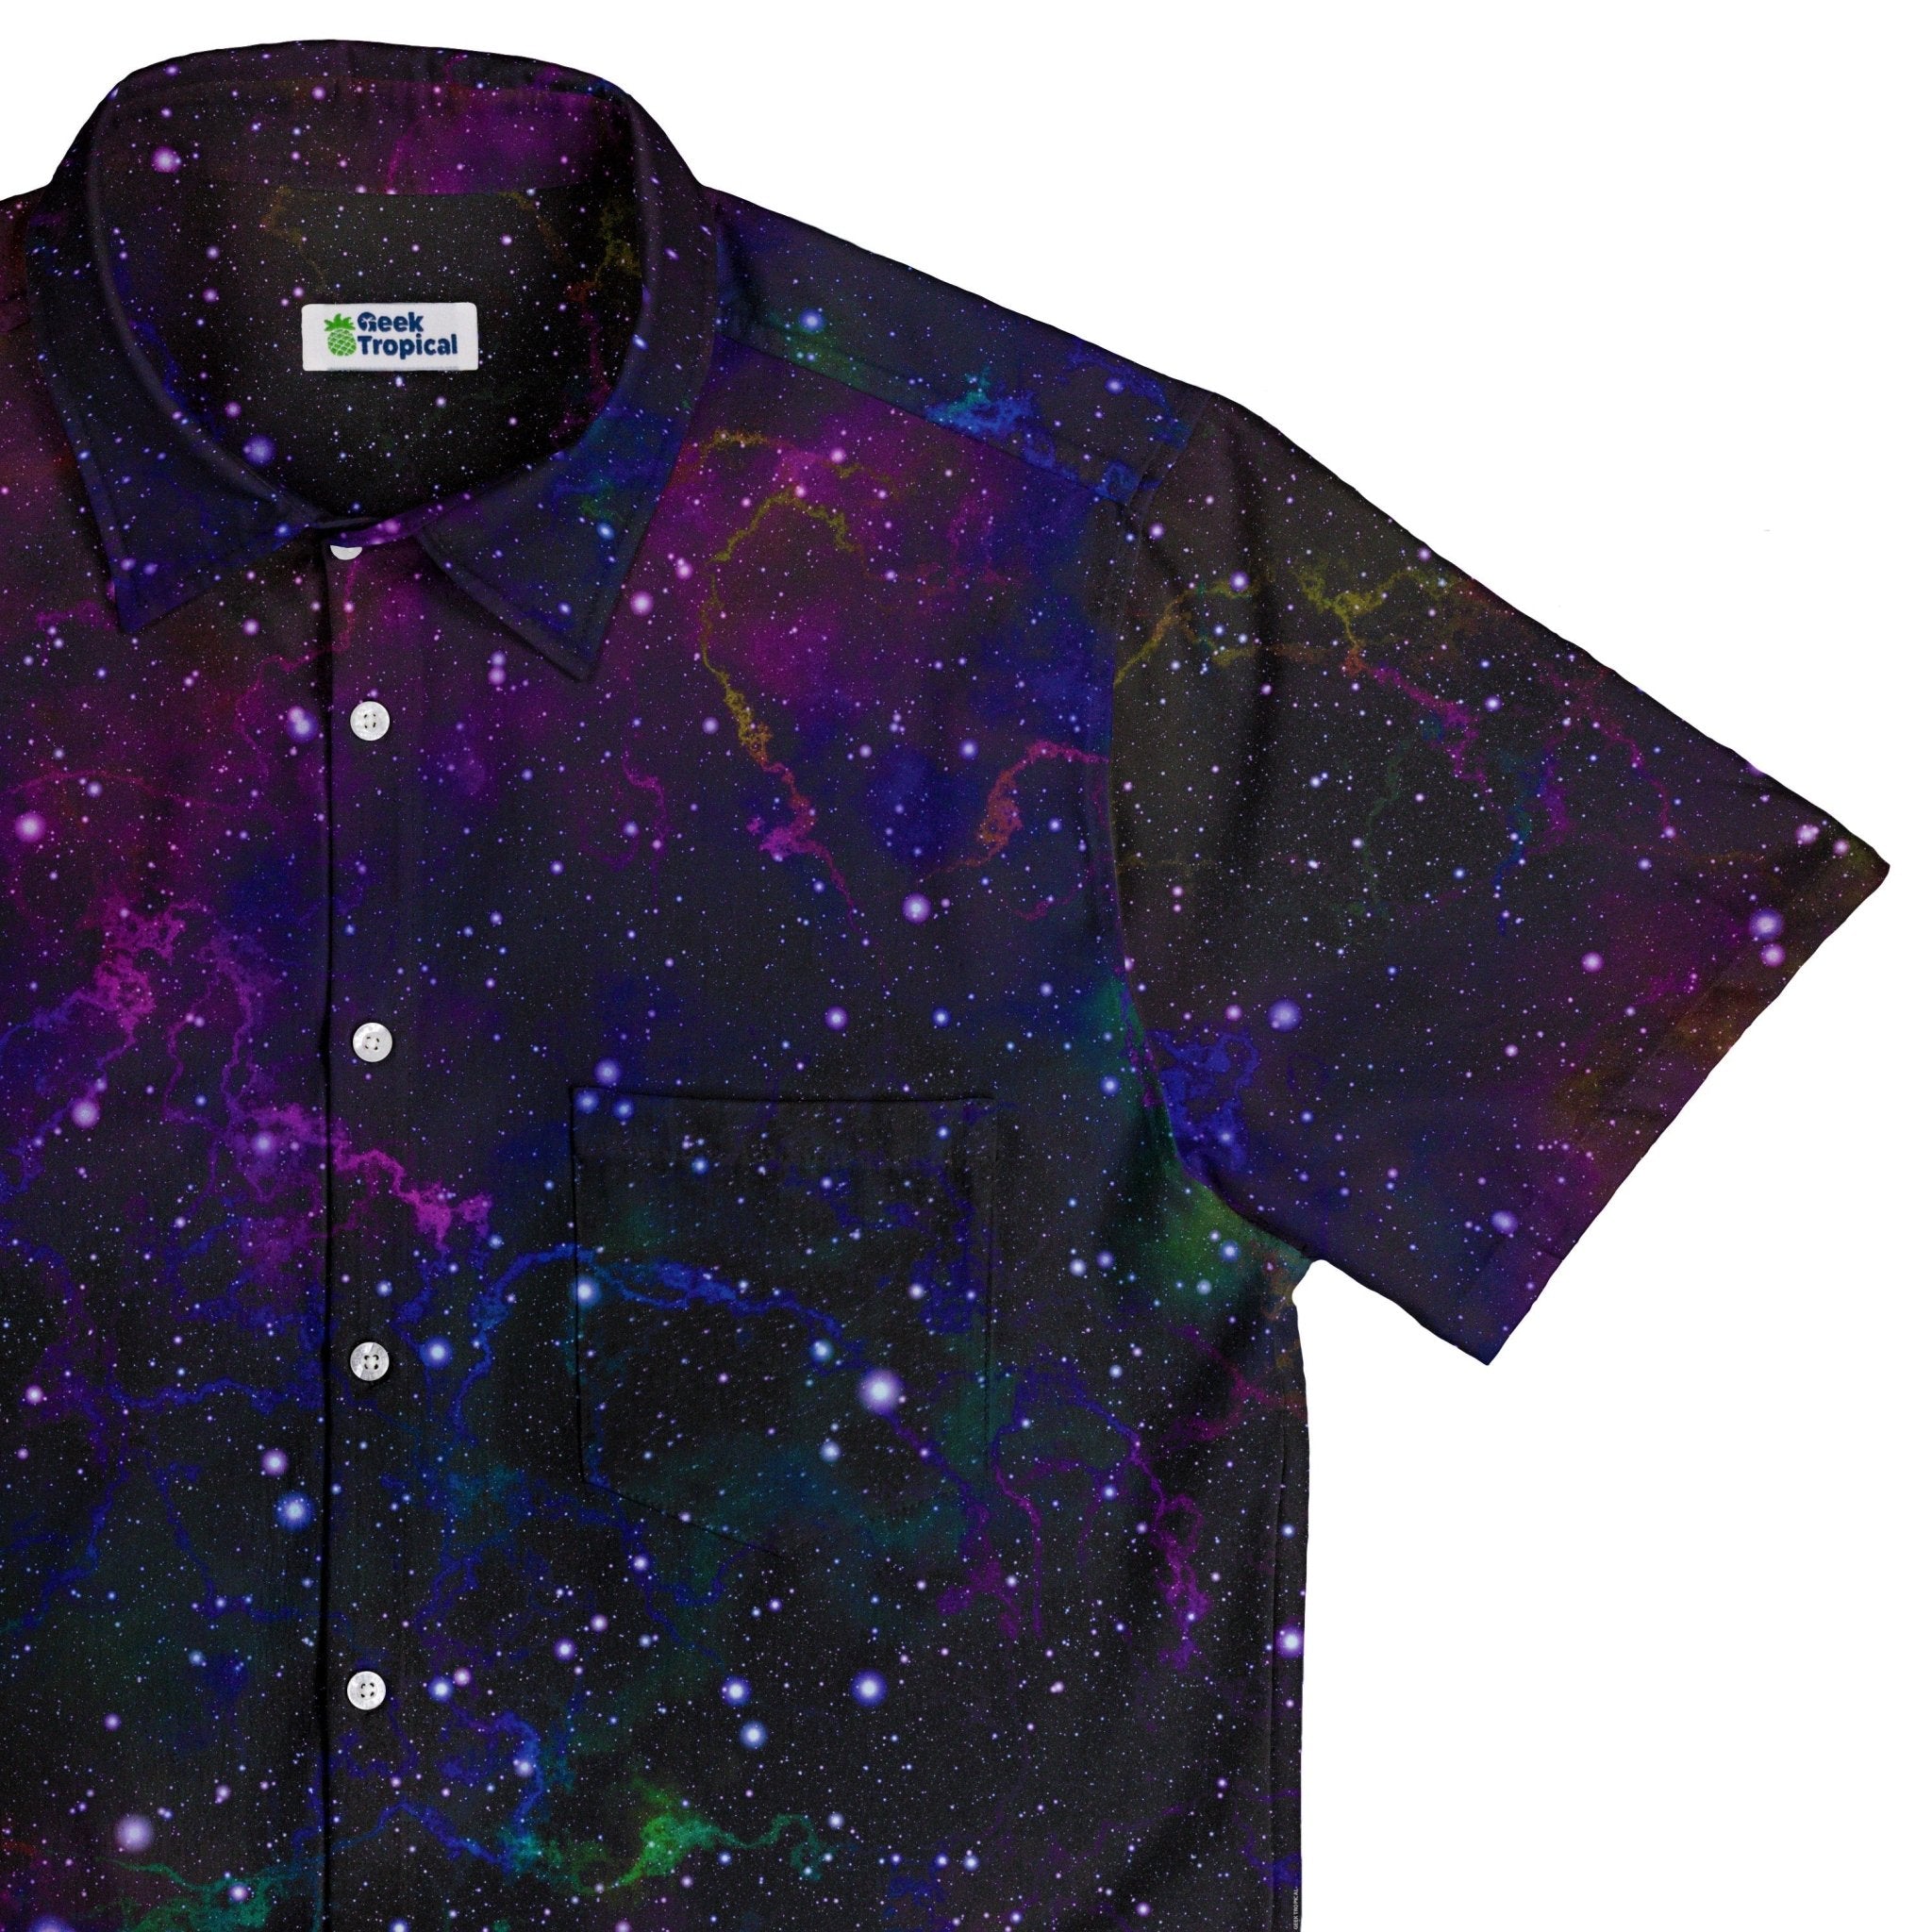 Beautiful Nebula Button Up Shirt - adult sizing - outer space & astronaut print -